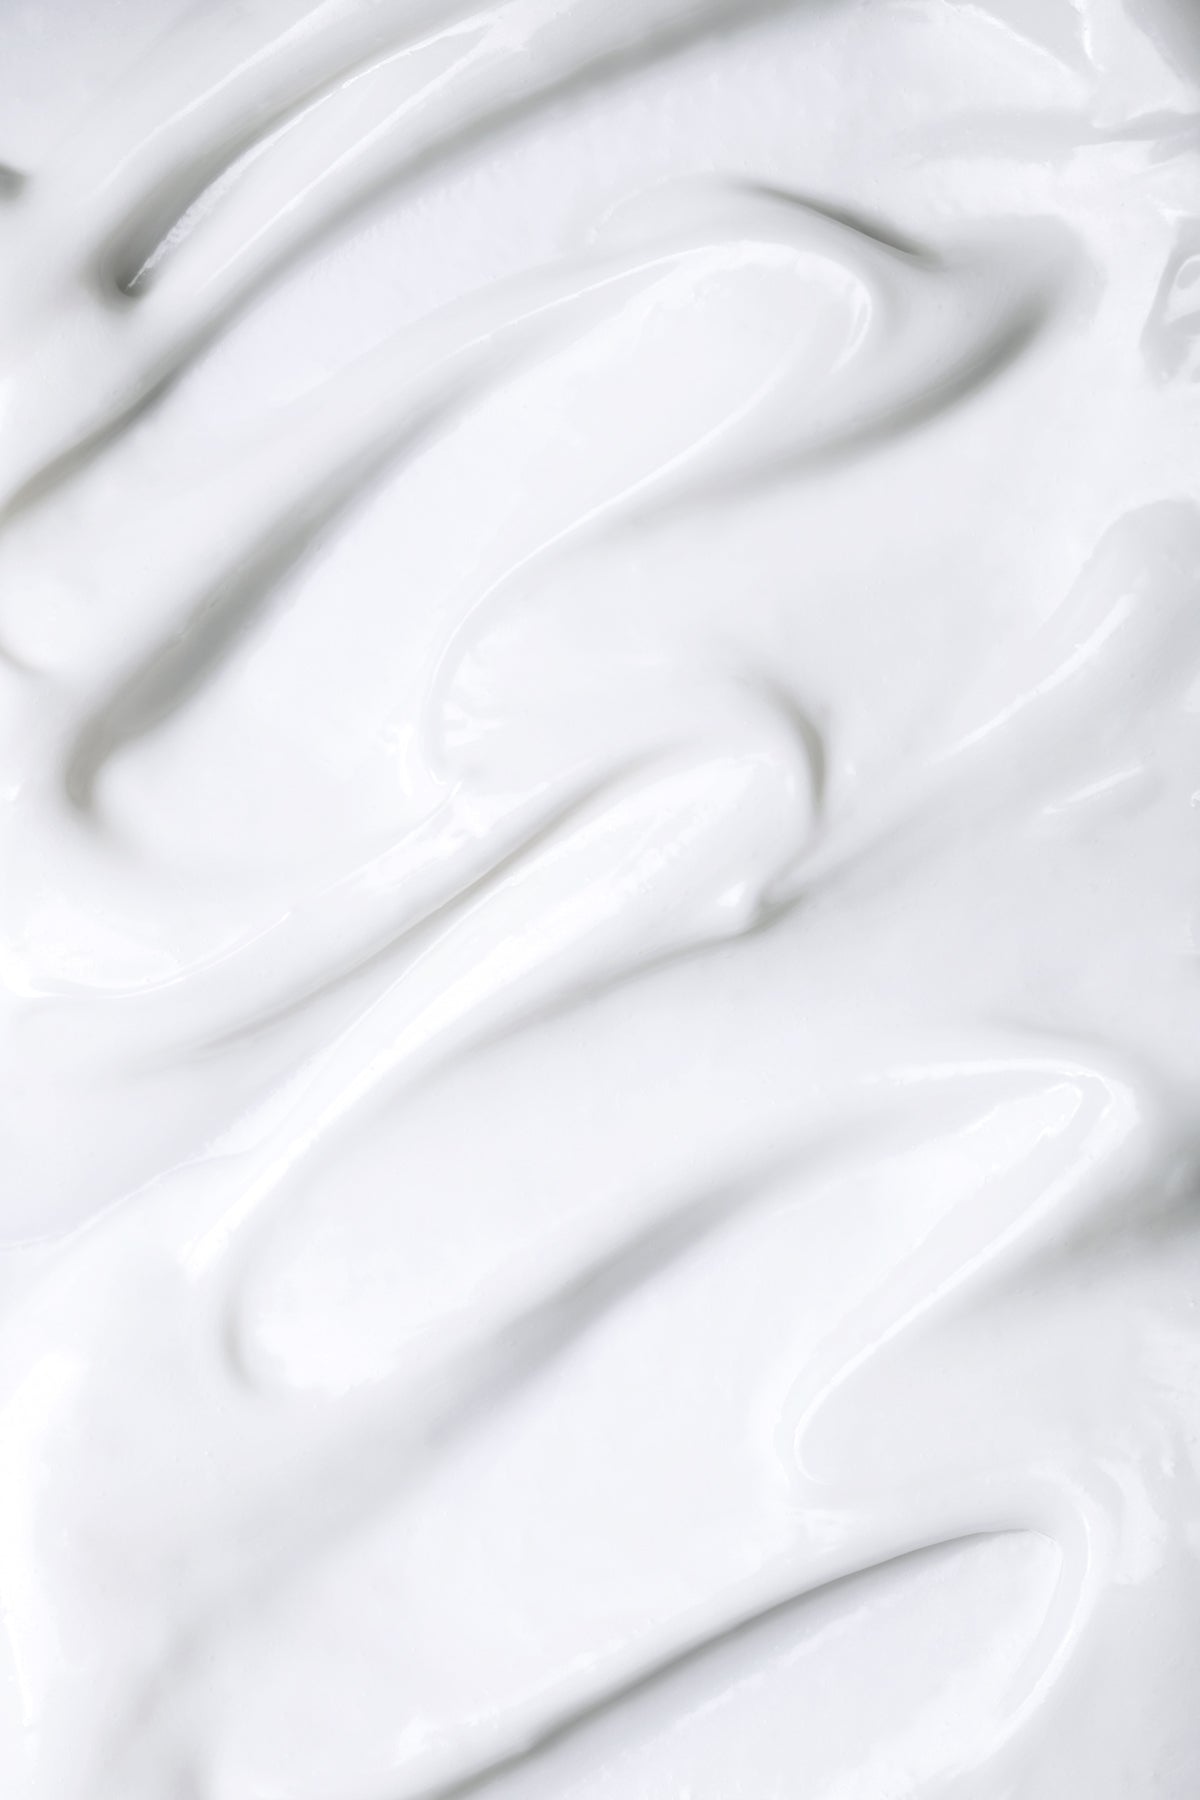 Protocol Skincare Niacinamide Hyaluronic Acid Moisturizer Cream Texture